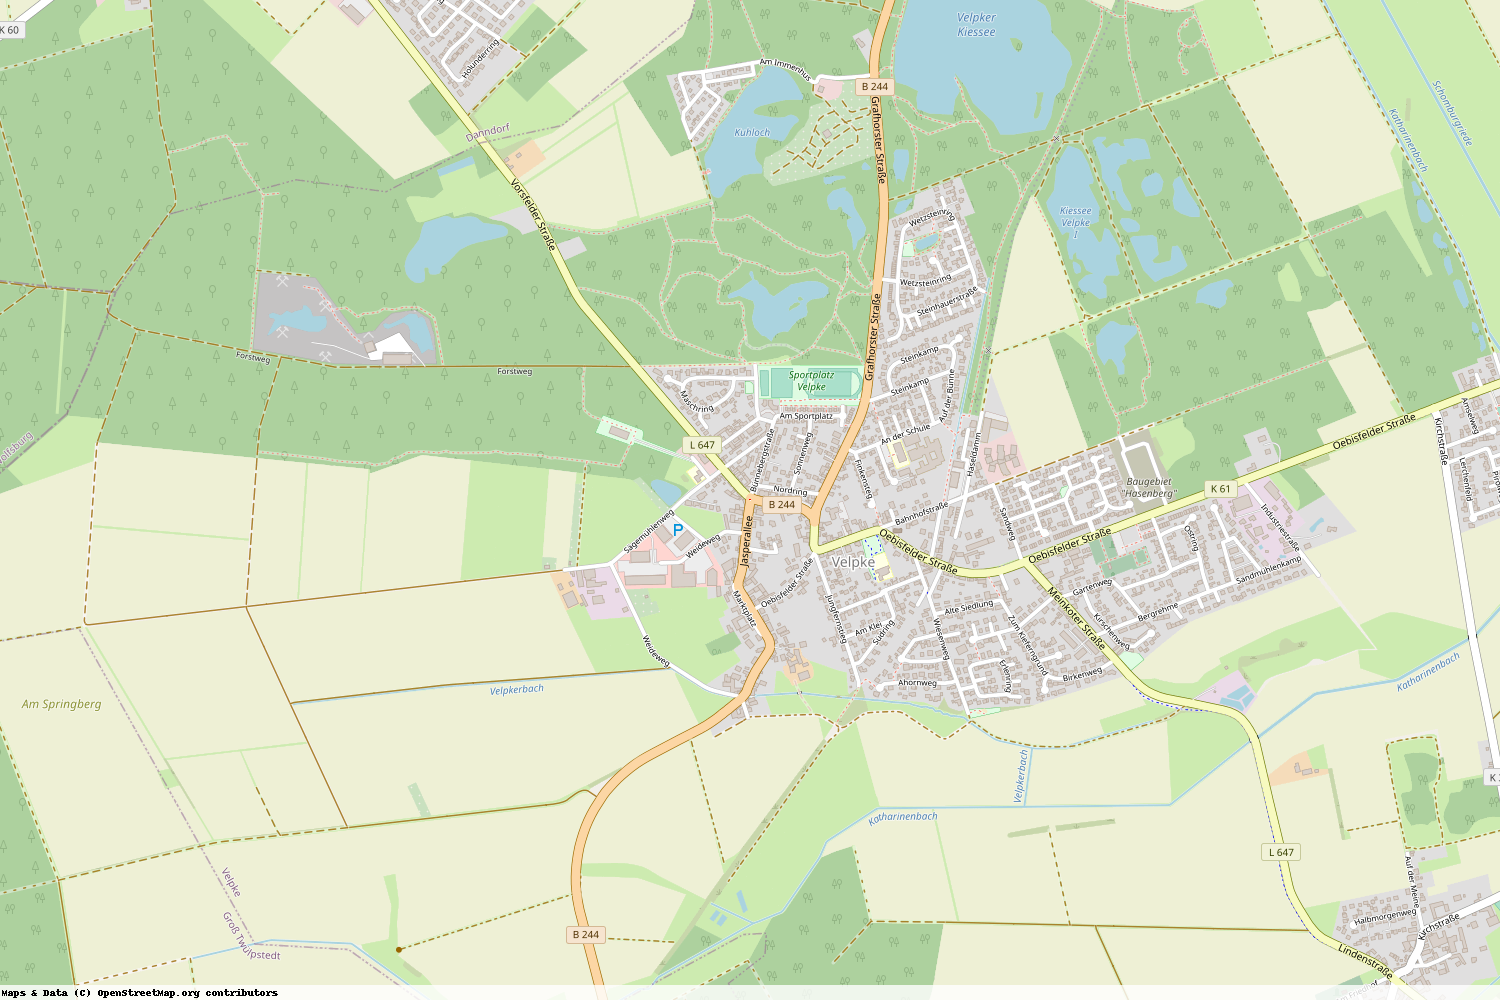 Ist gerade Stromausfall in Niedersachsen - Helmstedt - Velpke?